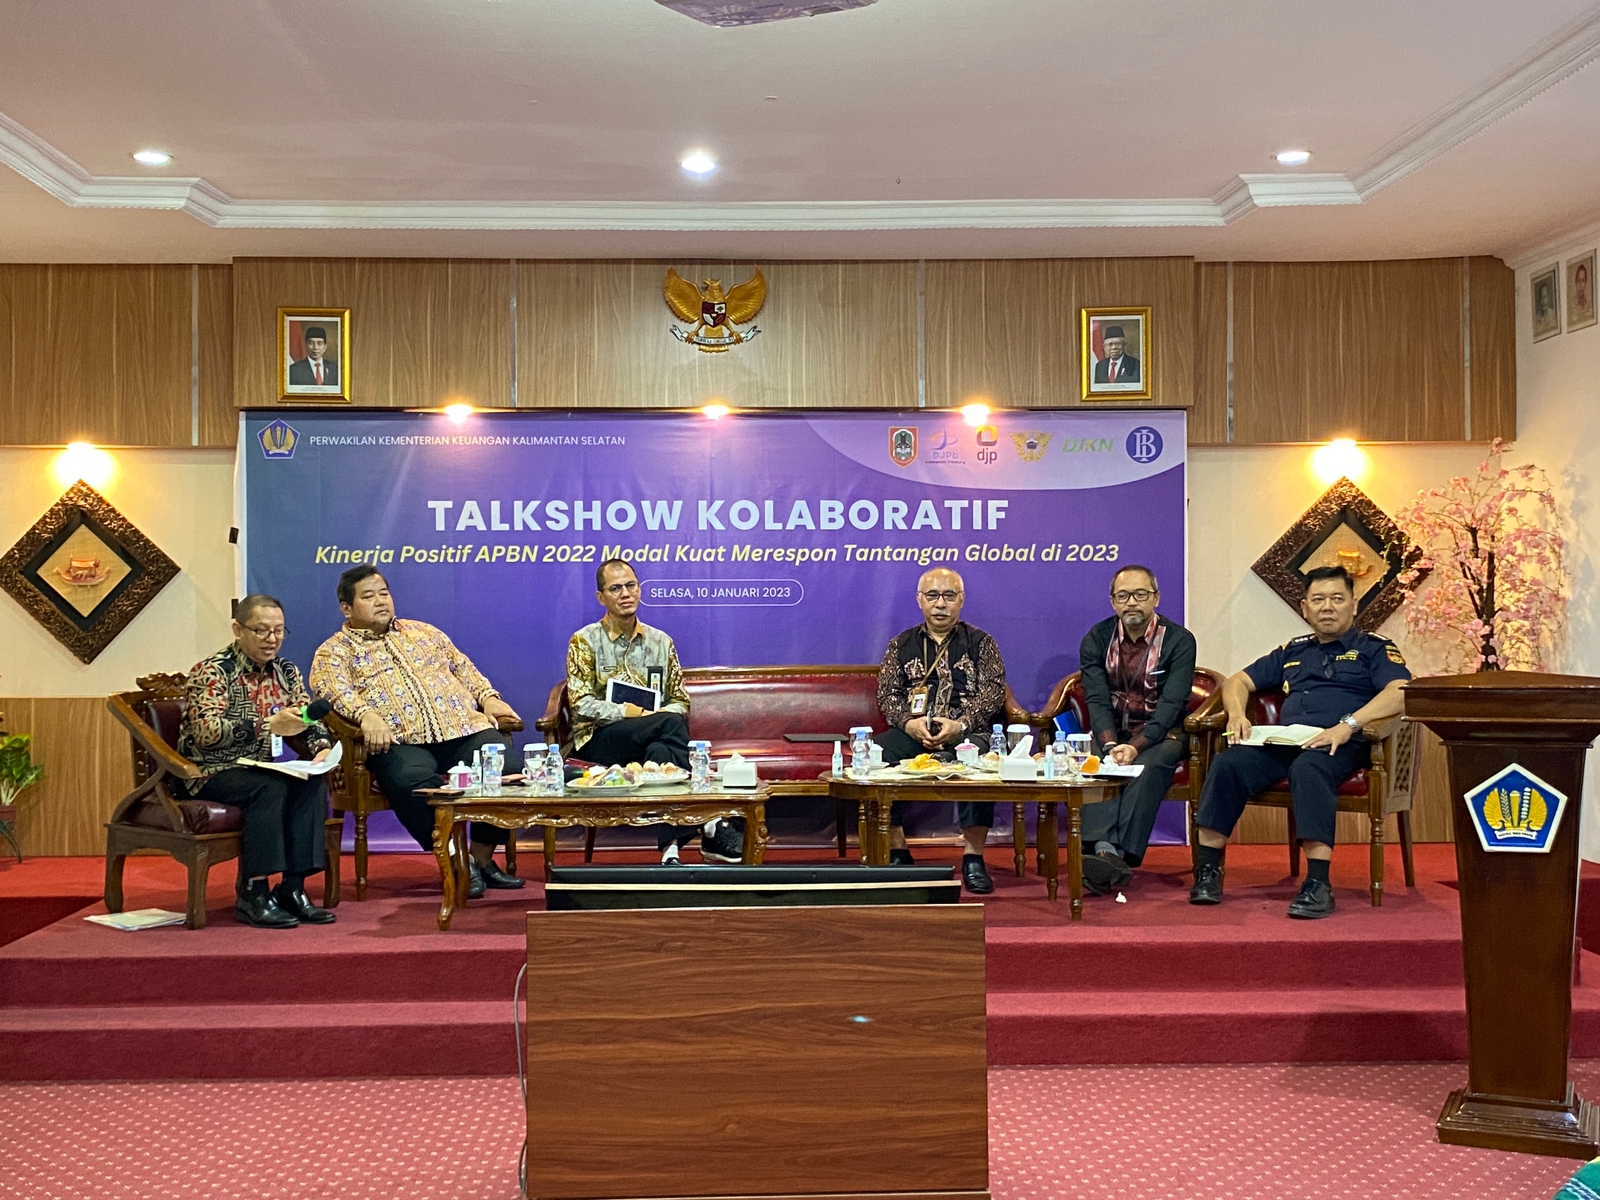 Talkshow Kolaboratif Kemenkeu Satu Kalimantan Selatan, “ Kinerja Positif APBN 2022 Modal Kuat Merespon Tantangan 2023”.